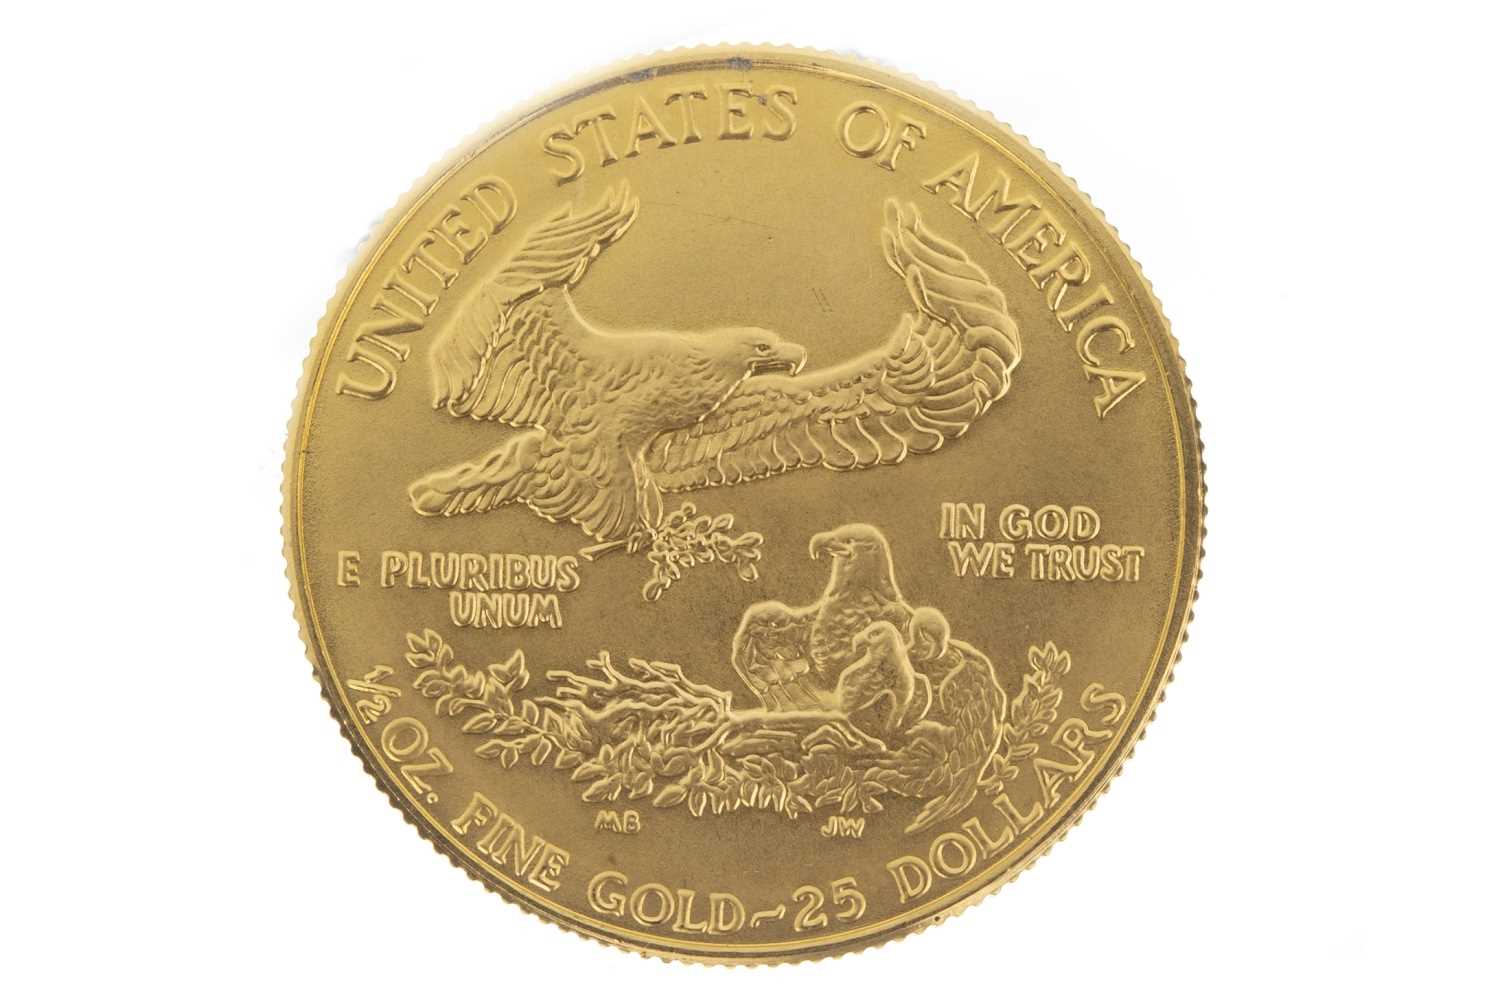 Lot 8 - A GOLD USA 25 DOLLAR 1/2 OZ GOLD COIN